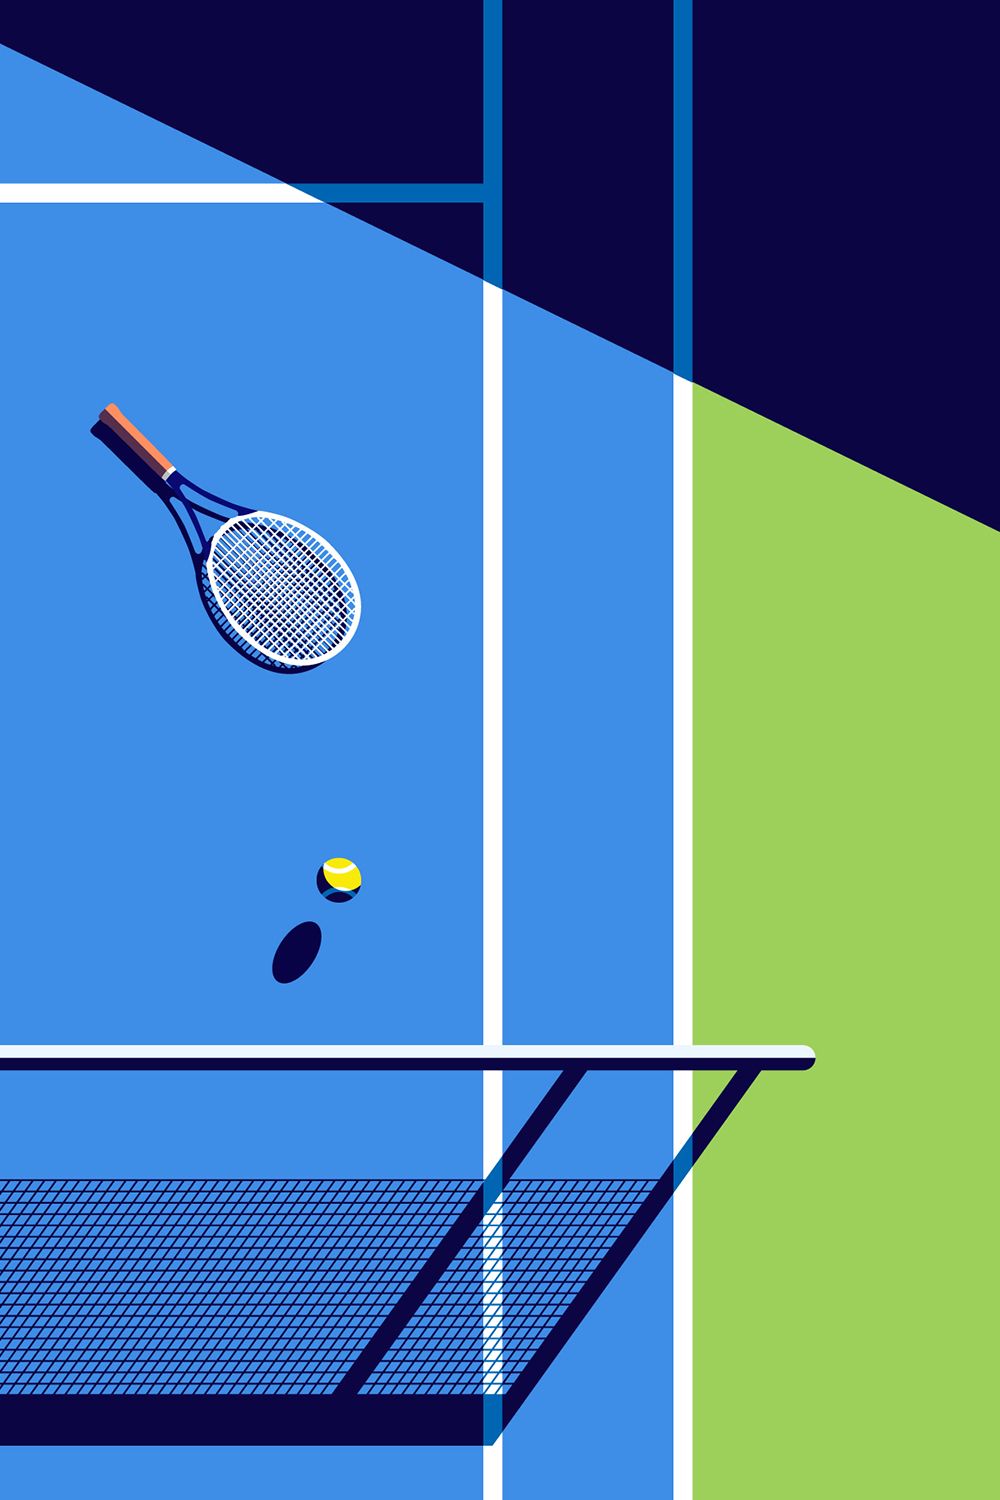 fond d'écran de tennis iphone,sport de raquette,raquette de tennis,tennis,raquette,badminton